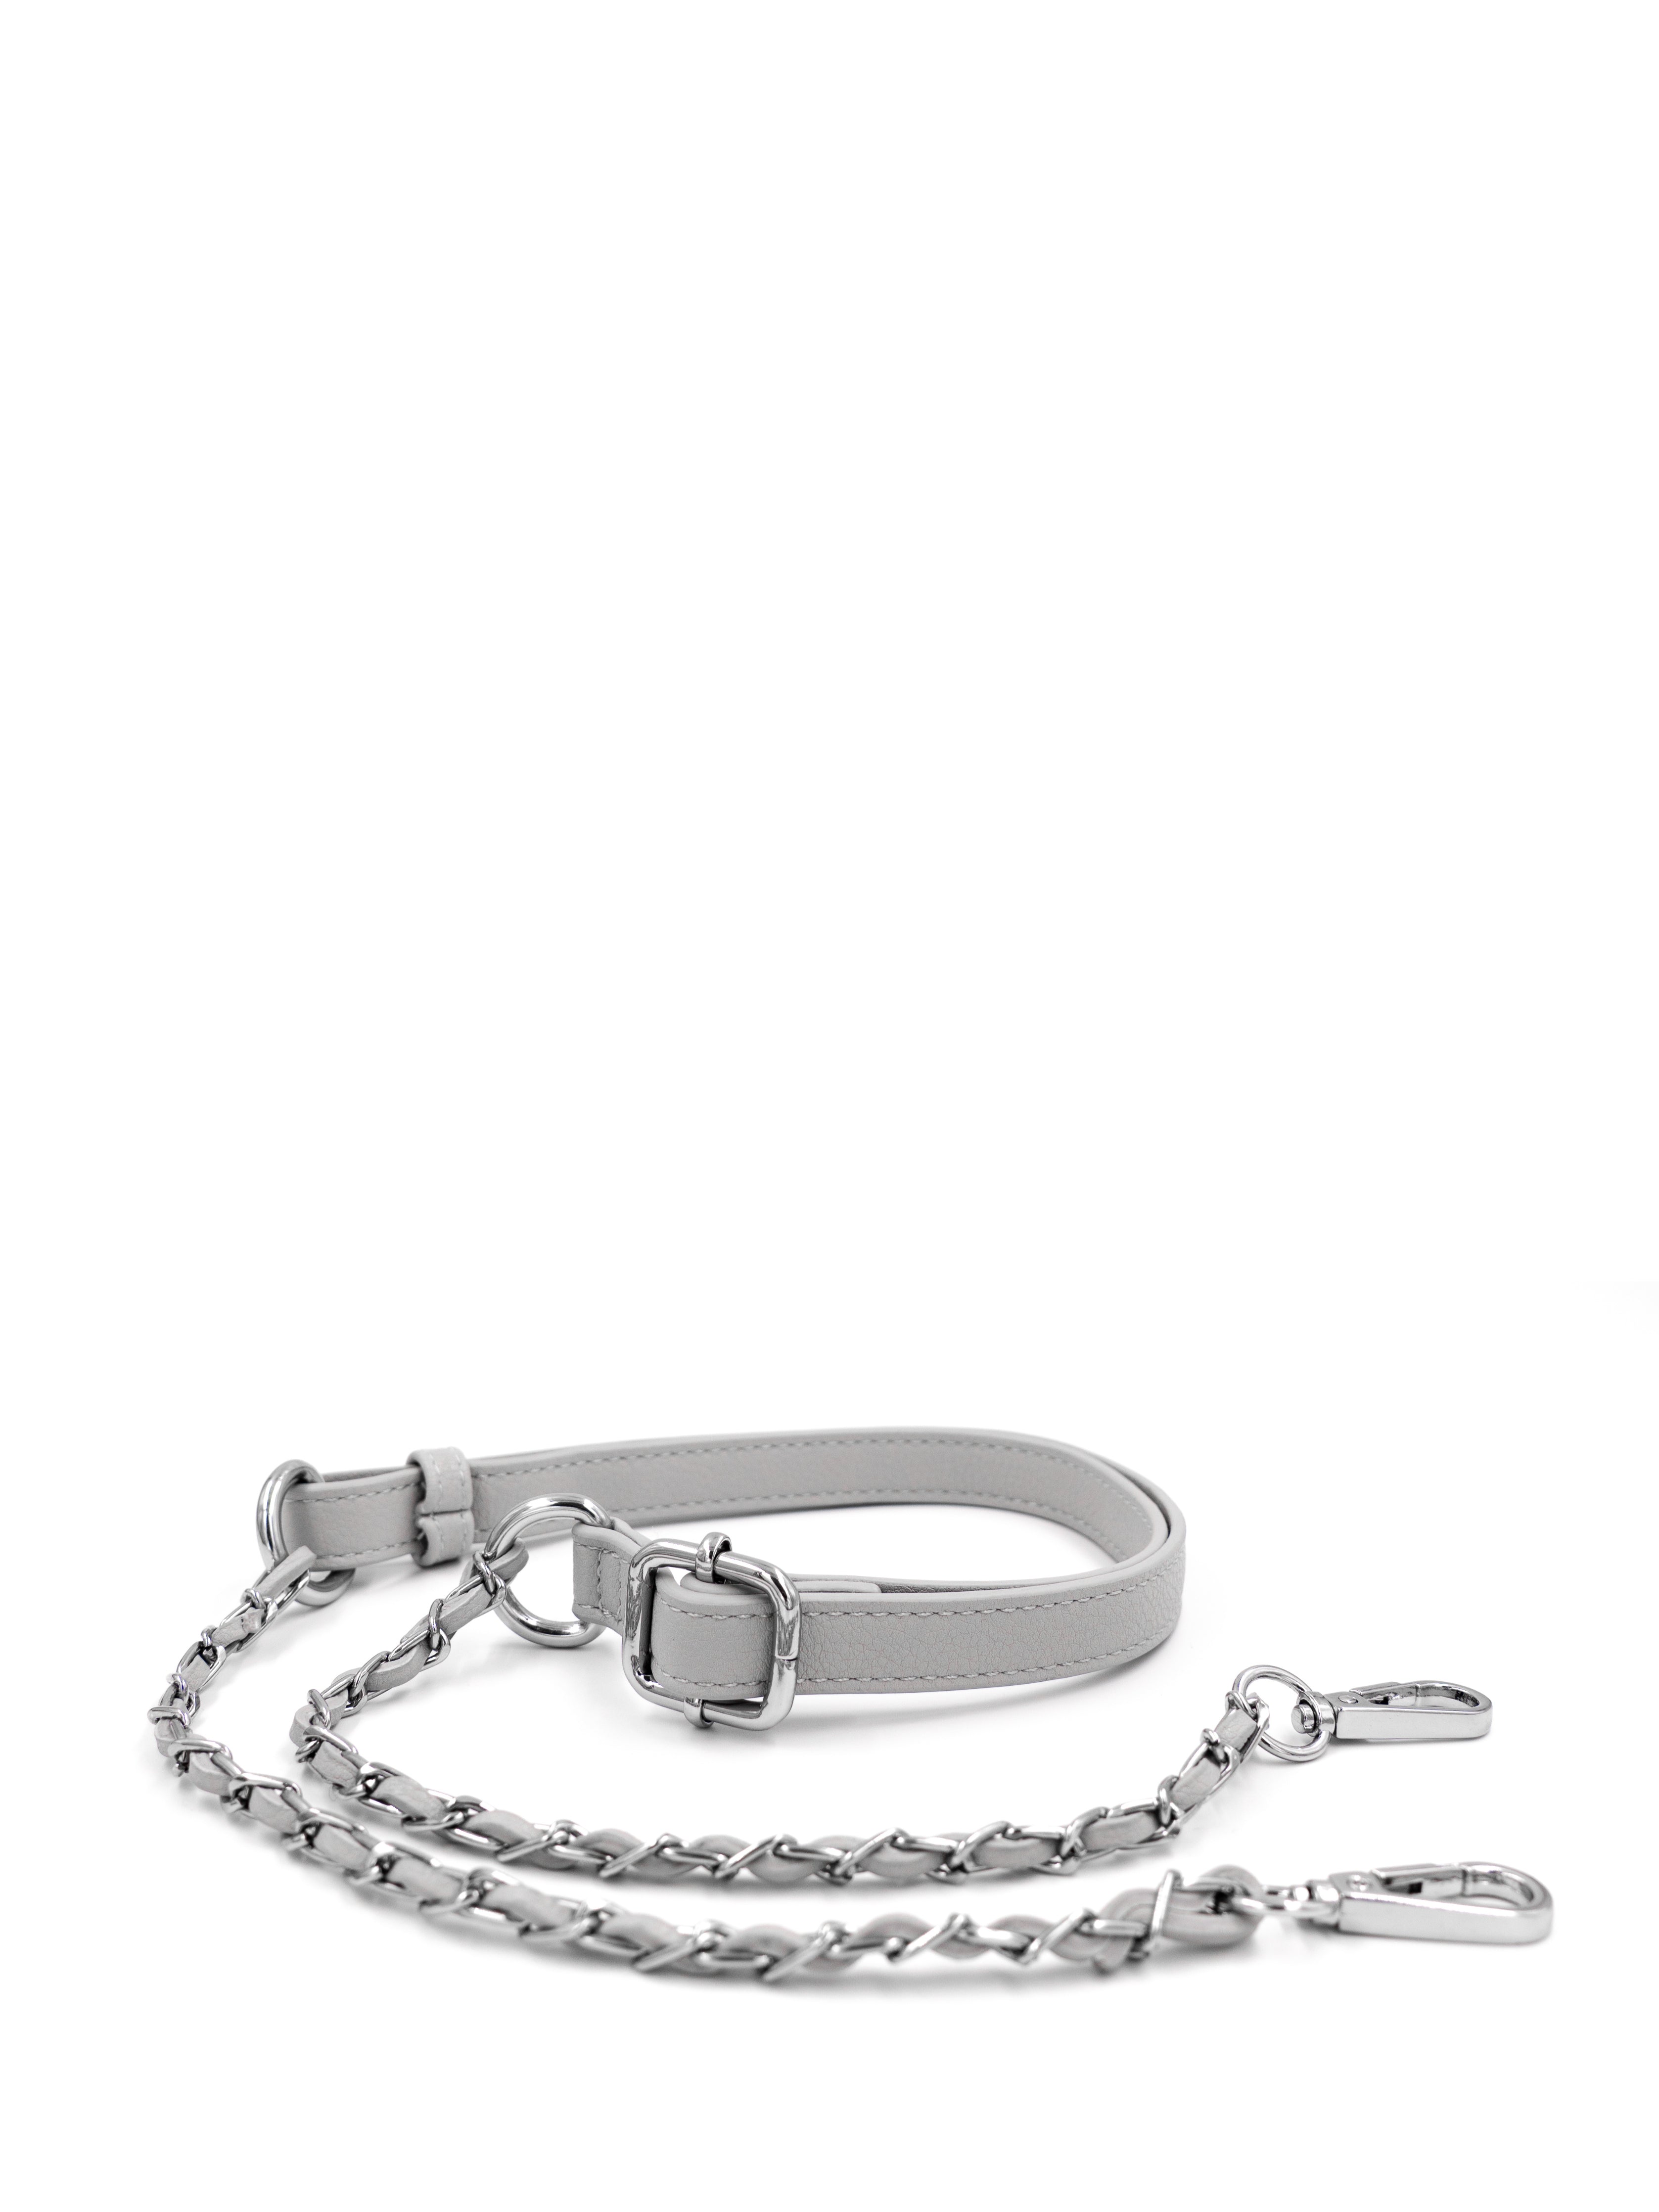 Chain Riemen Grey/Silver